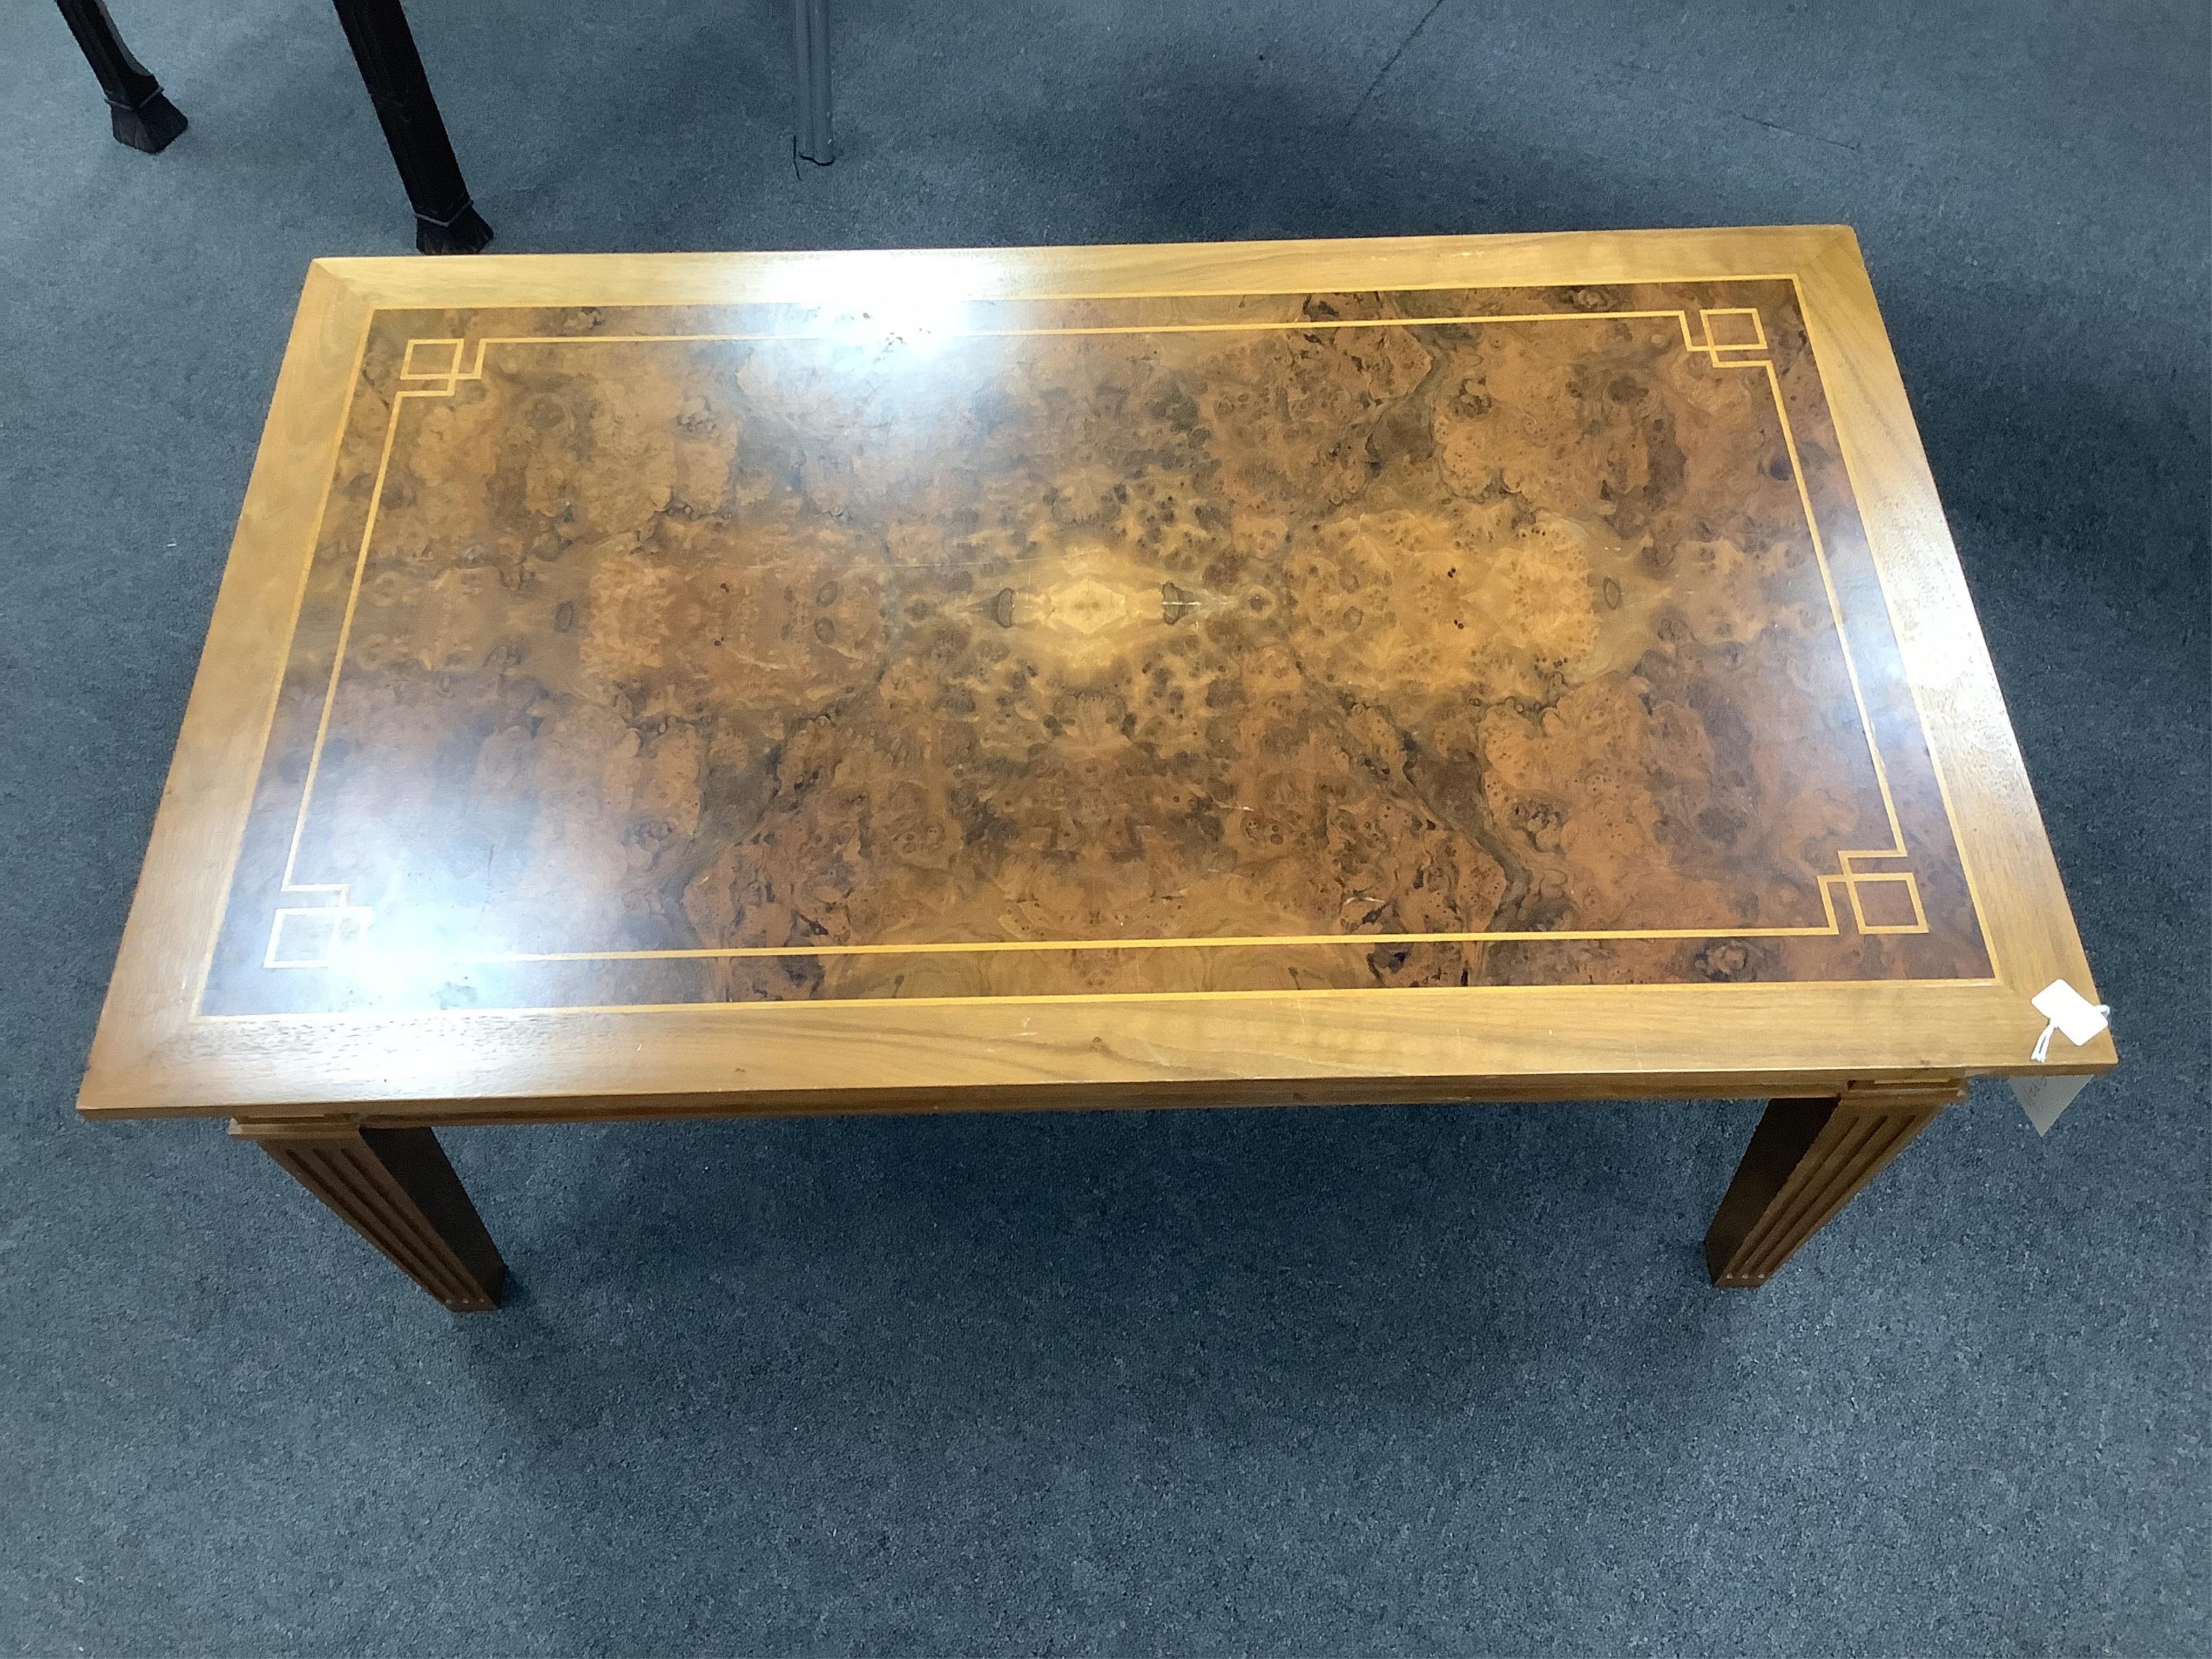 A David Linley inlaid burr walnut rectangular coffee table, width 100cm, depth 60cm, height 45cm. Condition - fair